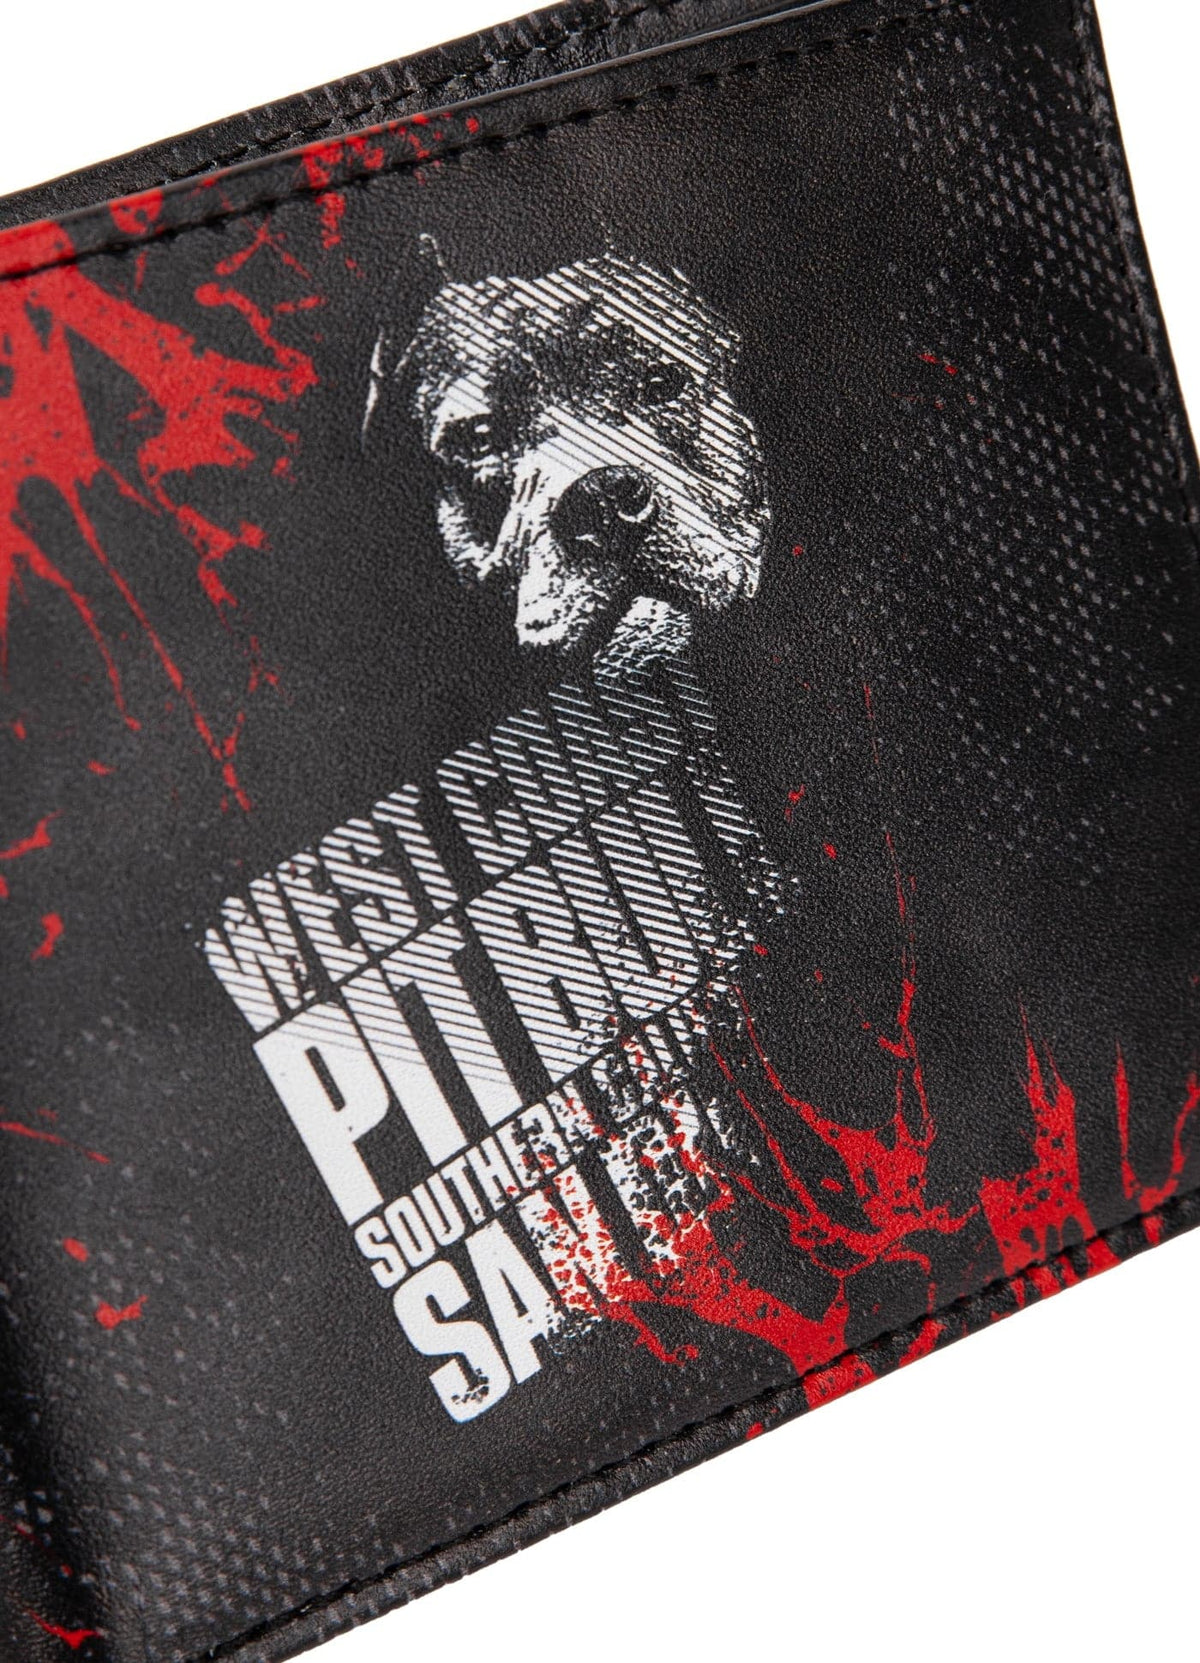 BLOOD DOG Black Leather Wallet - Pitbullstore.eu